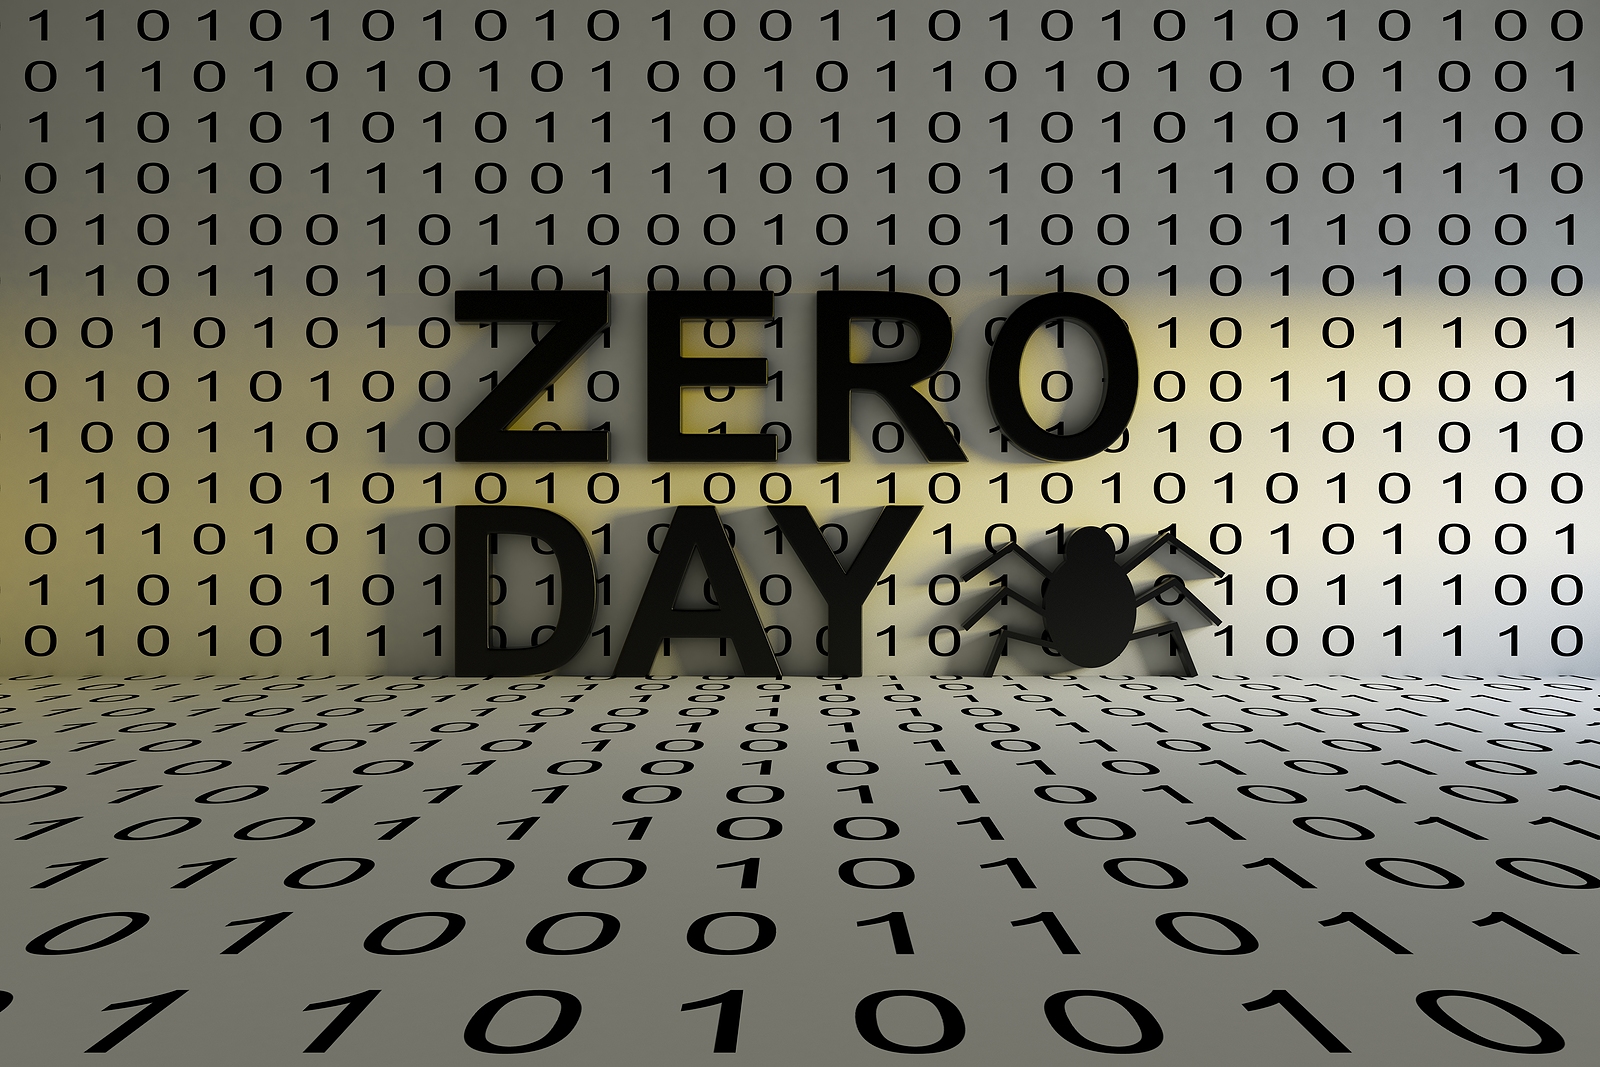 Zero Day Summer: Microsoft Warns of Fresh New Software Exploits – Source: www.securityweek.com